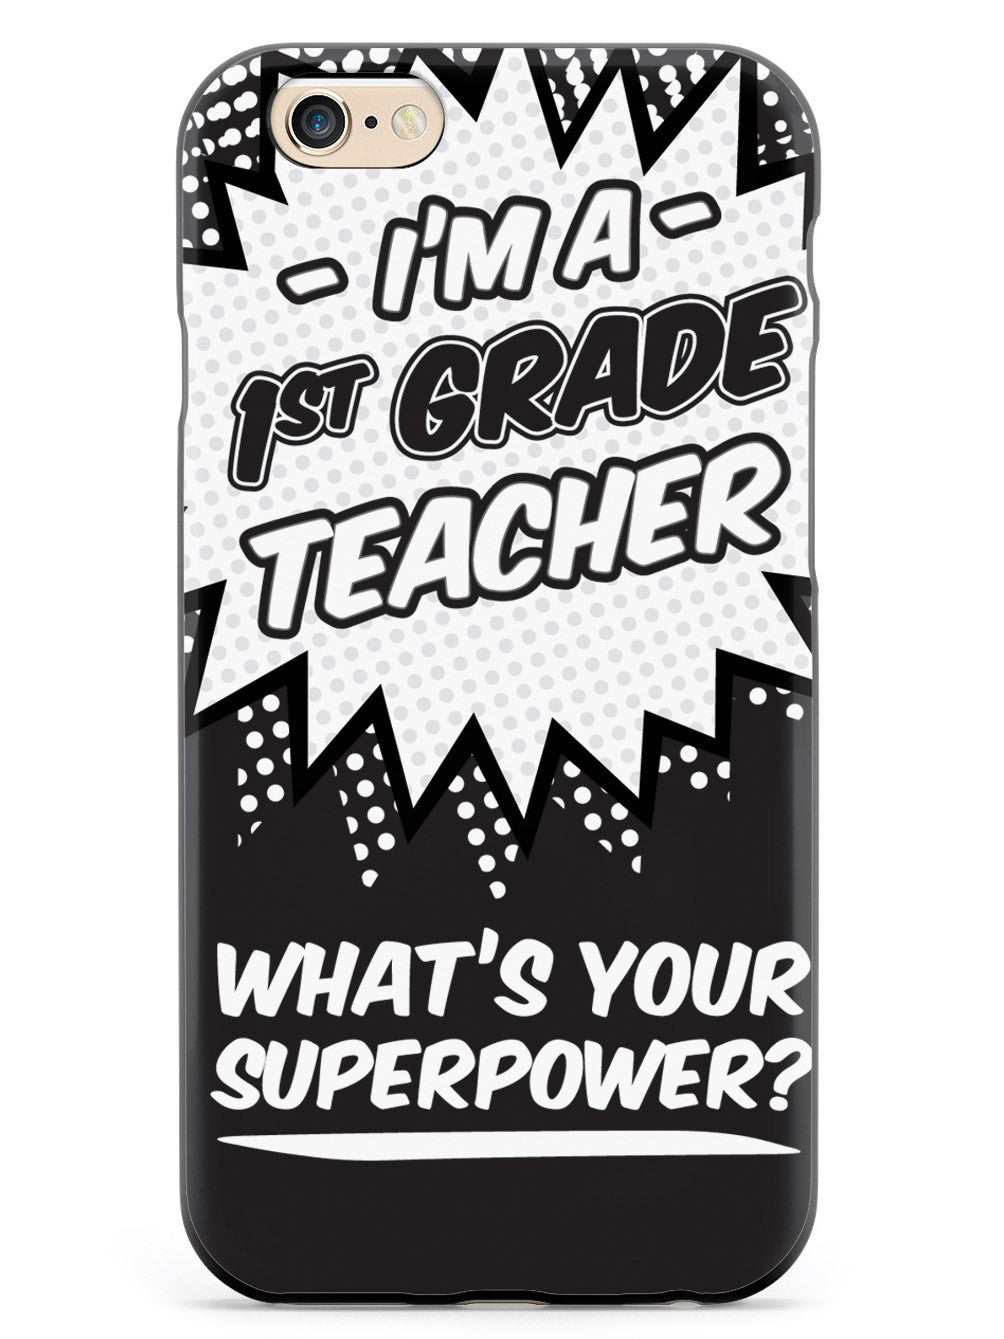 1st Grade Teacher - What's Your Superpower? Case